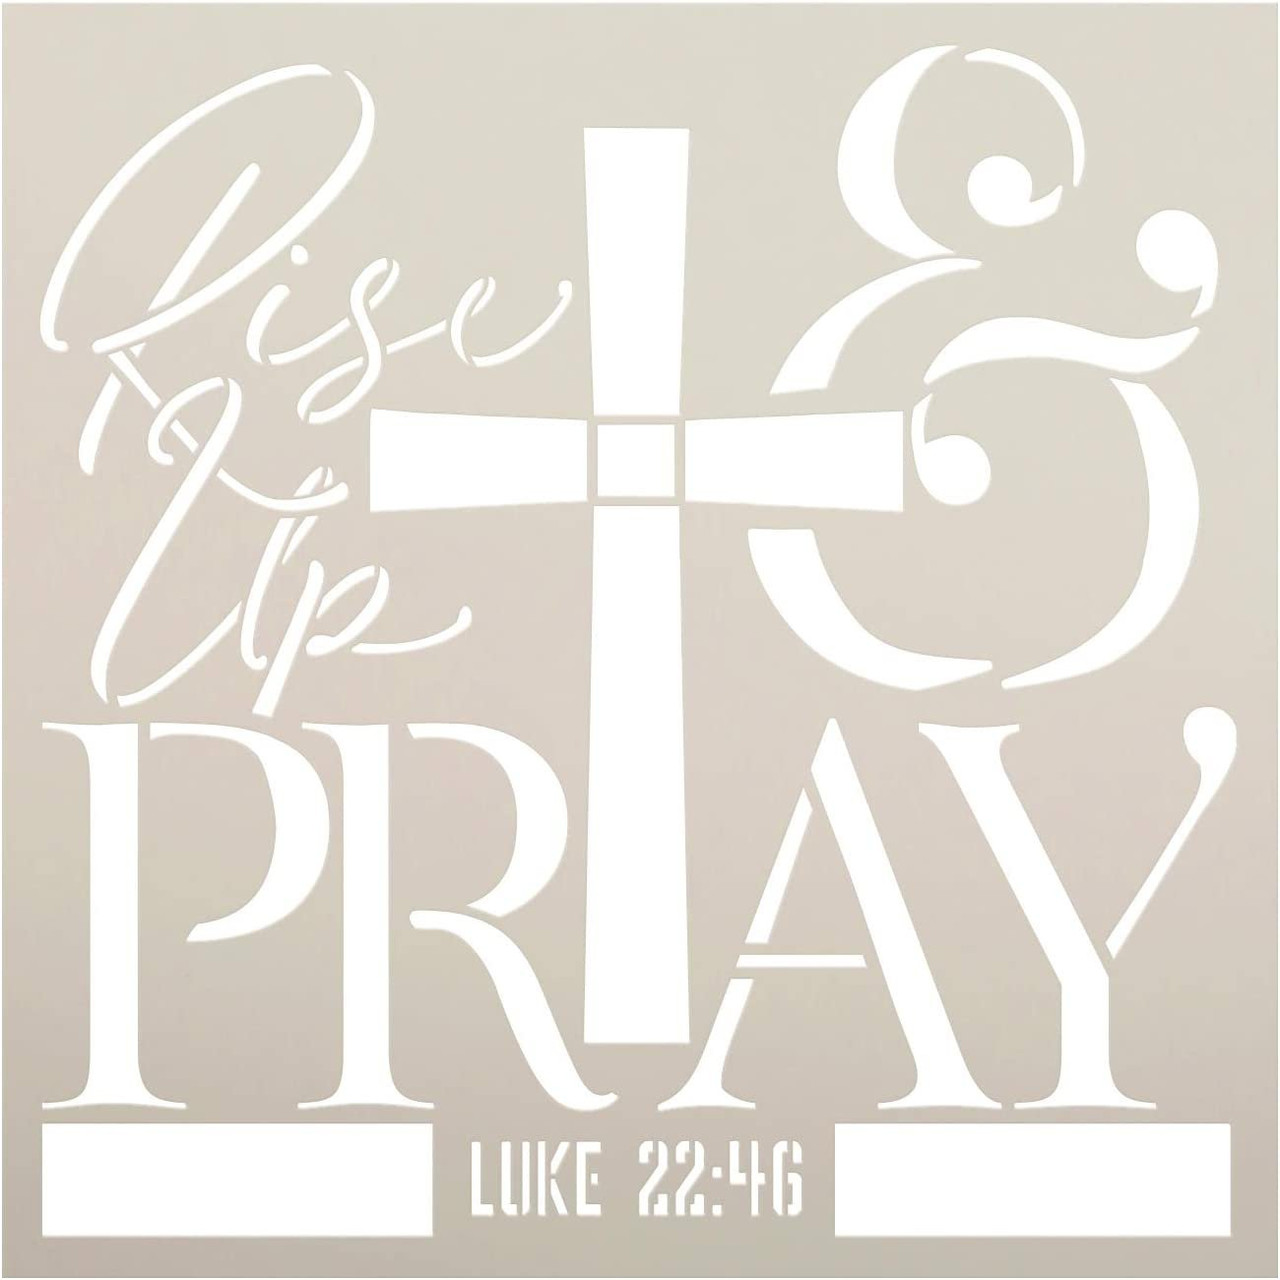 Rise Up & Pray Stencil by StudioR12 | DIY Faith Cross Home Decor | Luke 22:46 | Craft & Paint Wood Sign | Reusable Mylar Template | Bible Cursive Script Family | Select Size